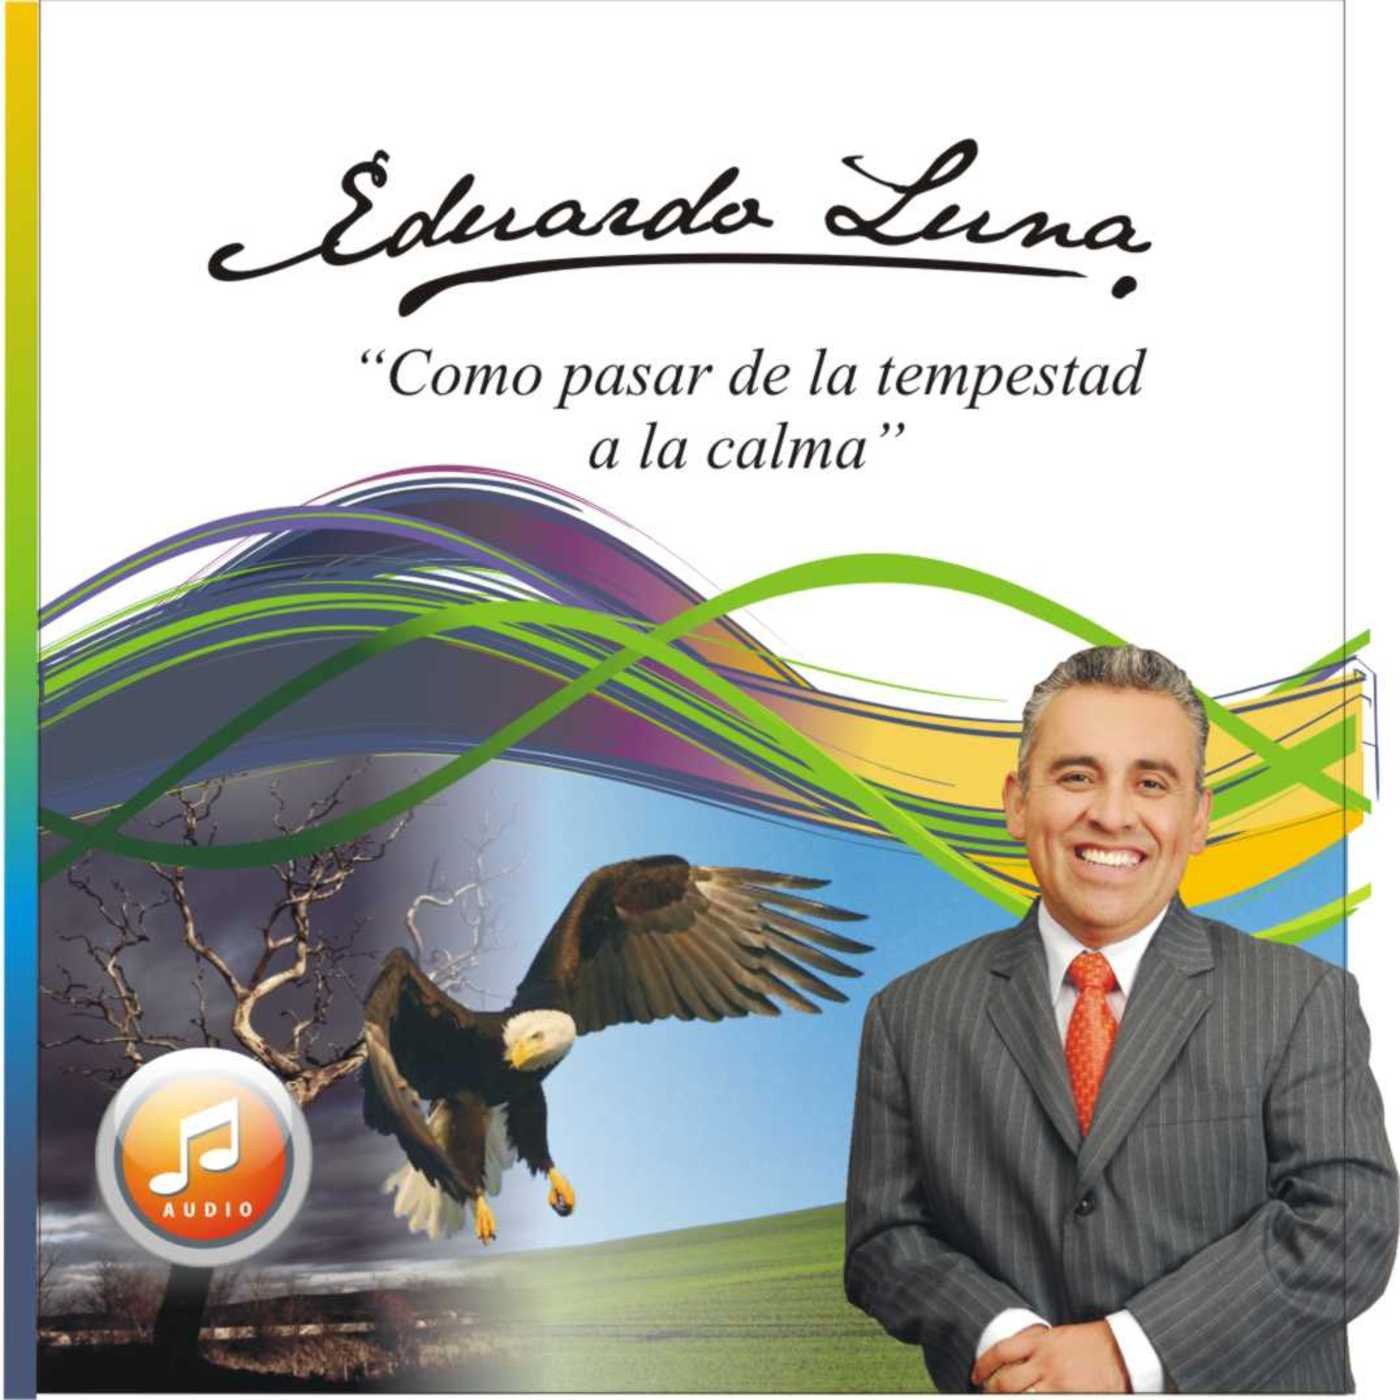 Eduardo Luna- Como pasar de la tempestad a la calm